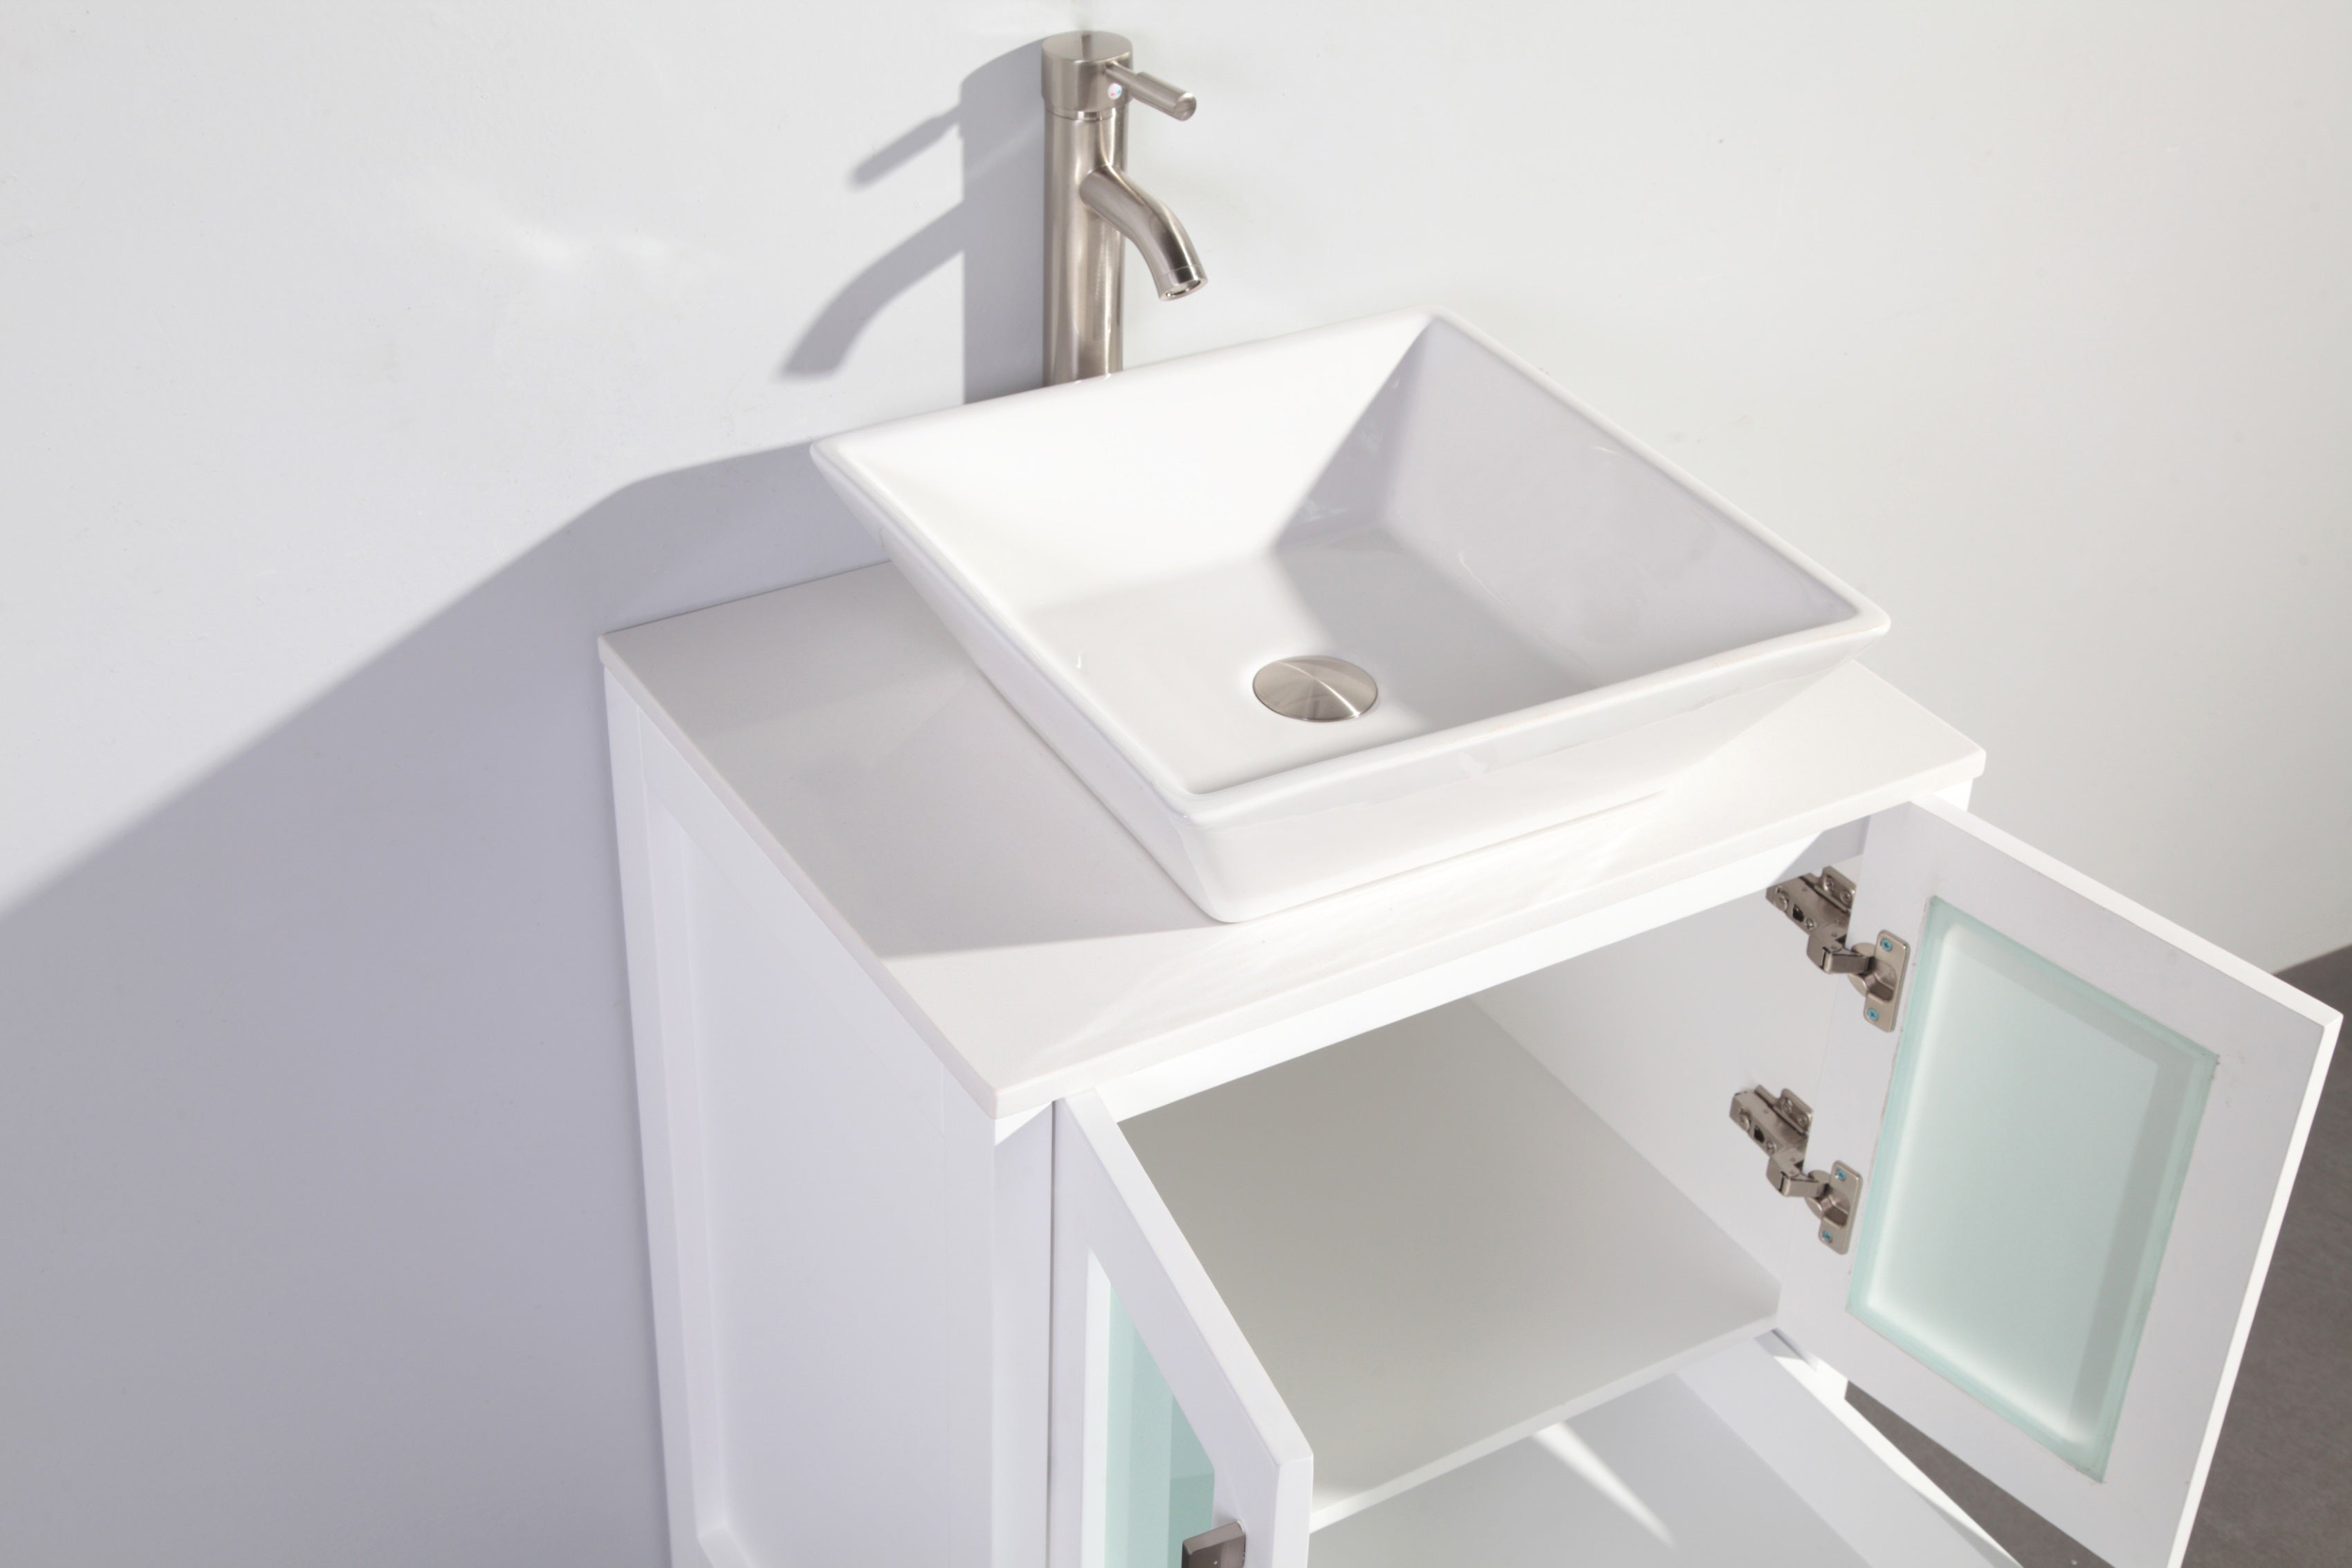 Vanity Art - Monaco 72" Double Vessel Sink Bathroom Vanity Set with Sinks and Mirrors - 2 Side Cabinets - Bhdepot 